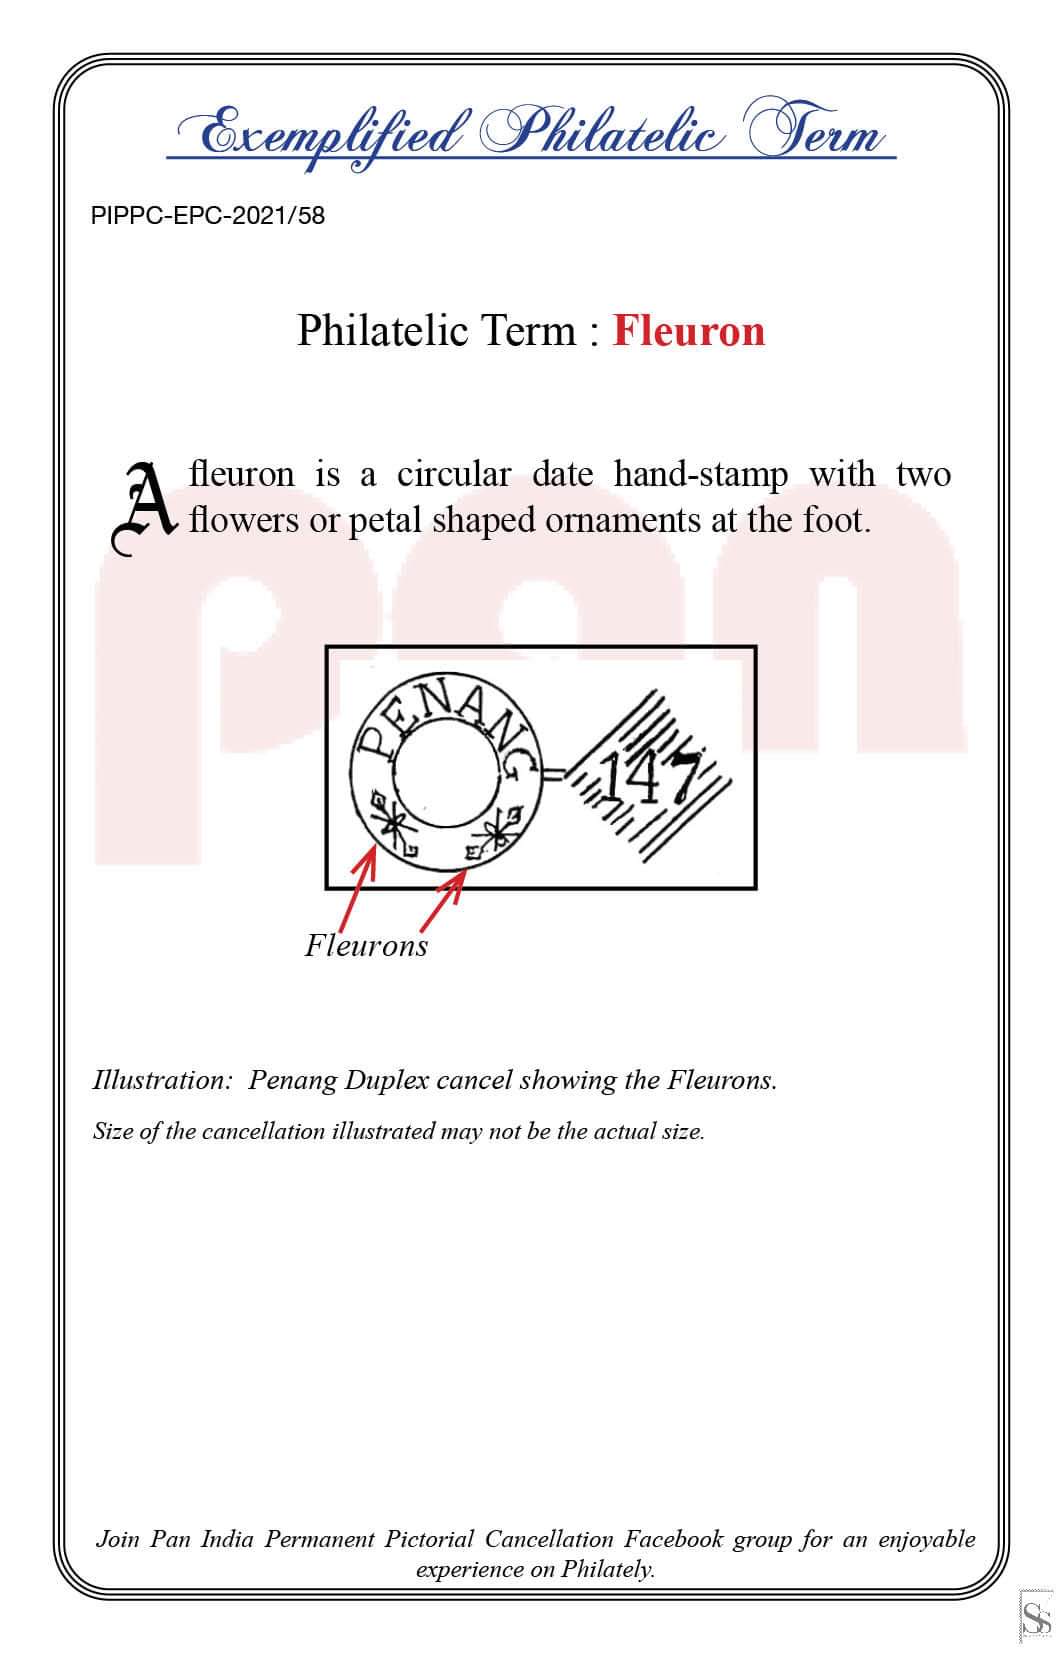 58. Today's Exemplified Philatelic term-Fleuron